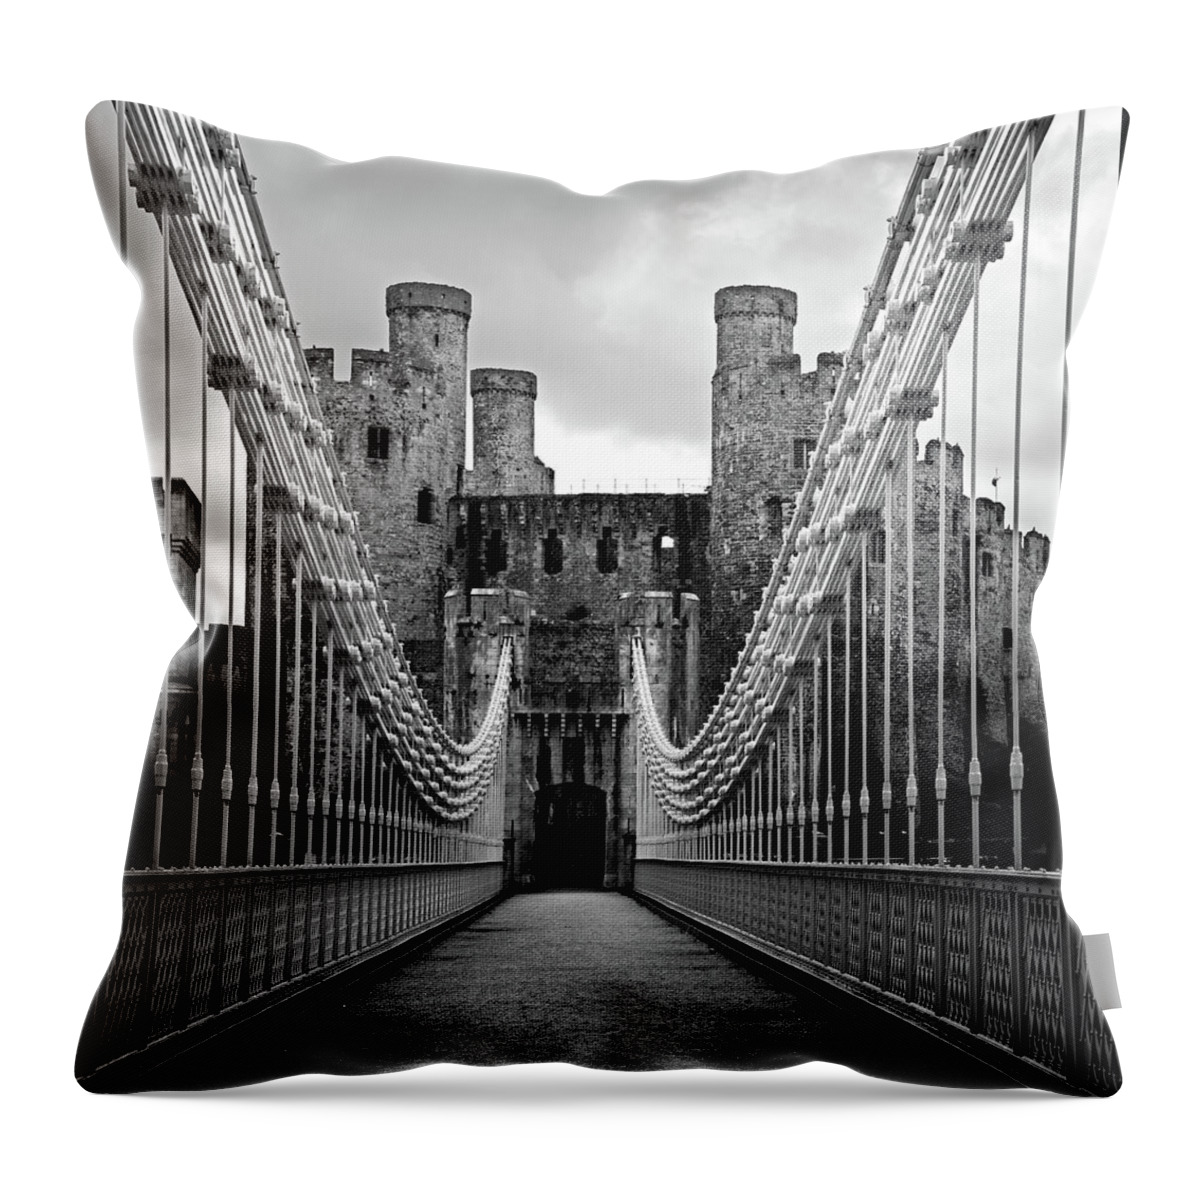 Drawbridge Throw Pillow featuring the photograph Drawbridge To Conwy Castle by Nicolasmccomber